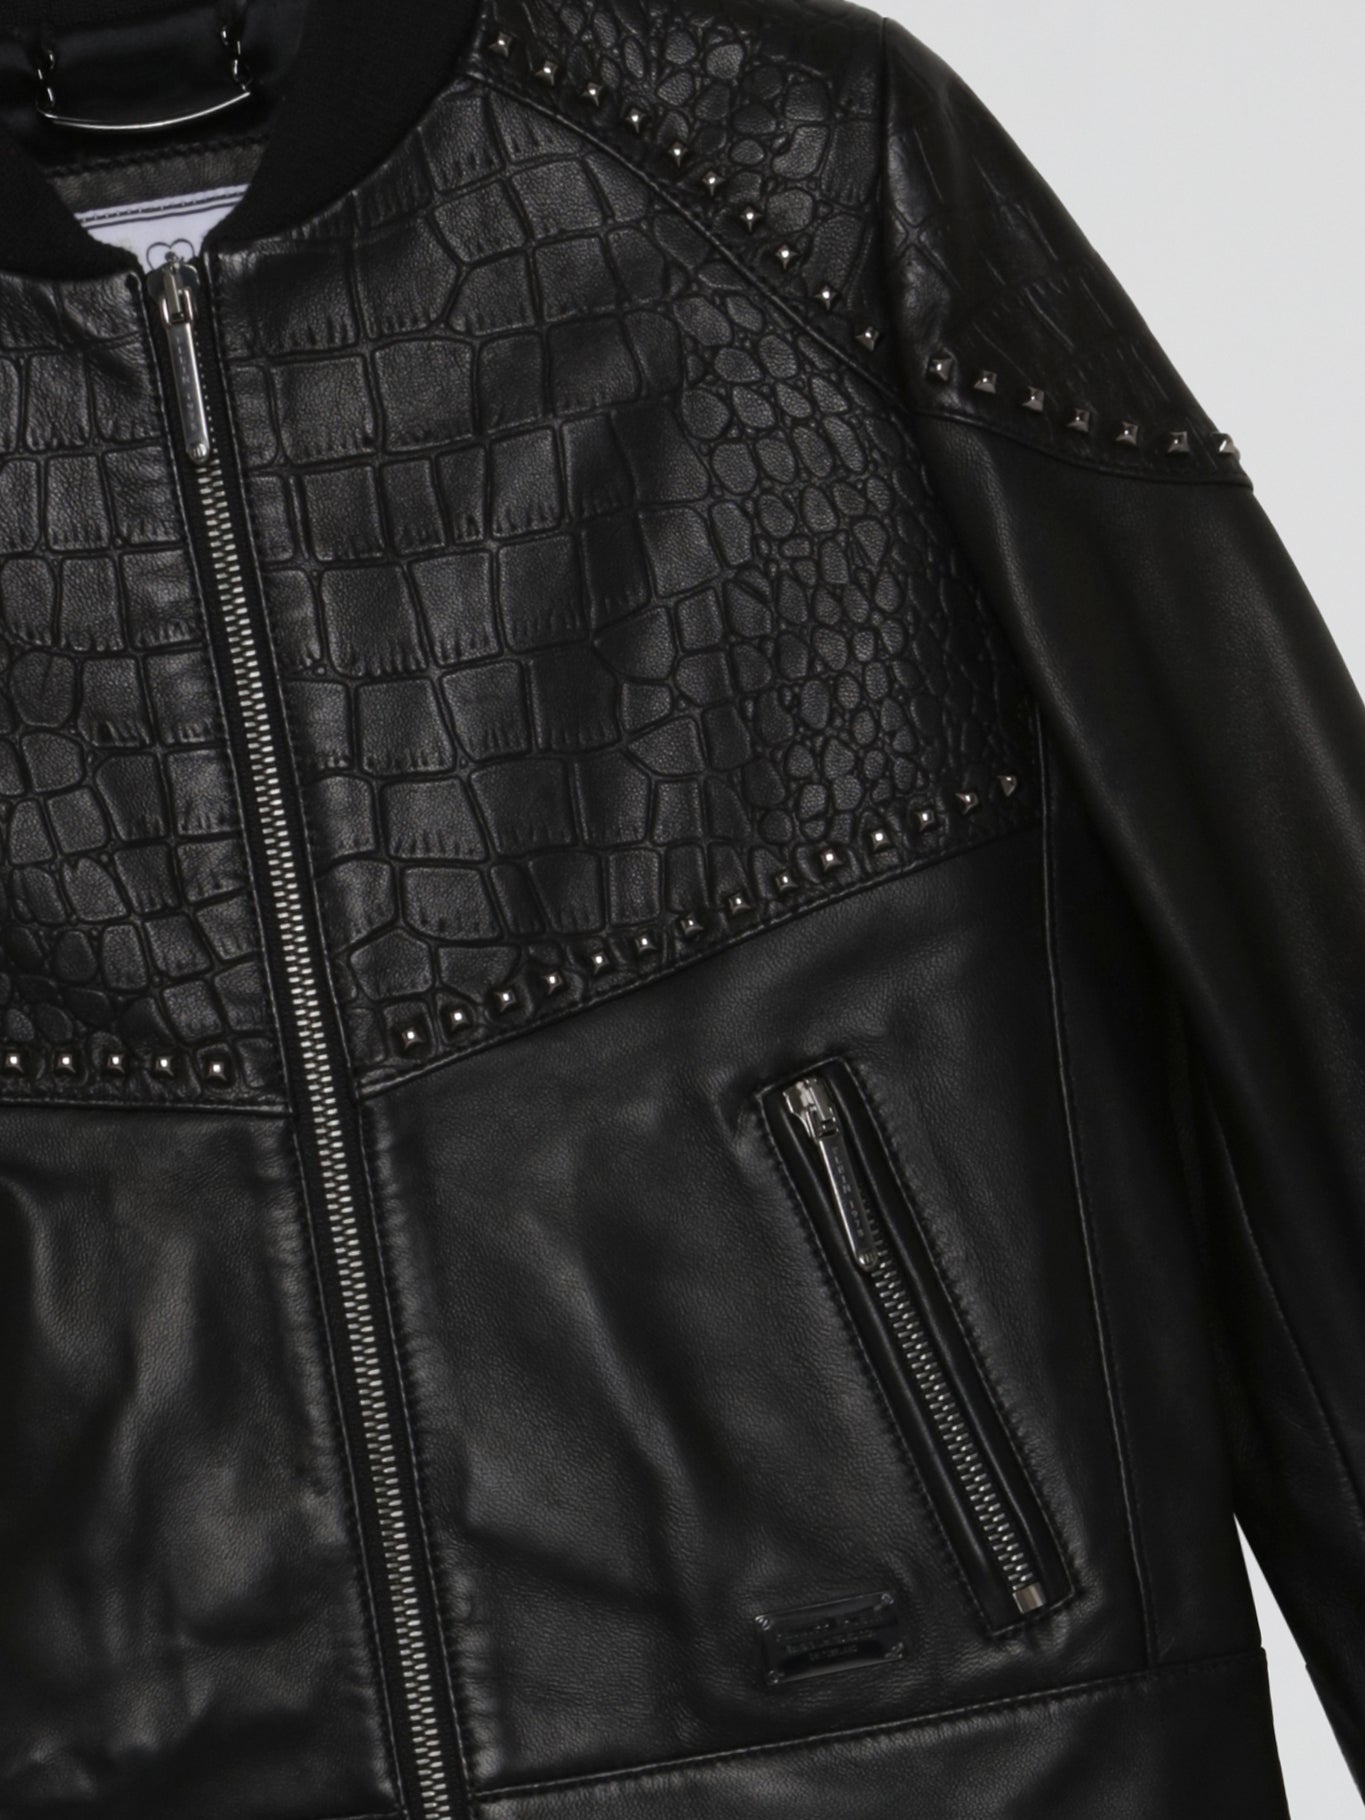 Black Reptilian Leather Jacket (Kids)